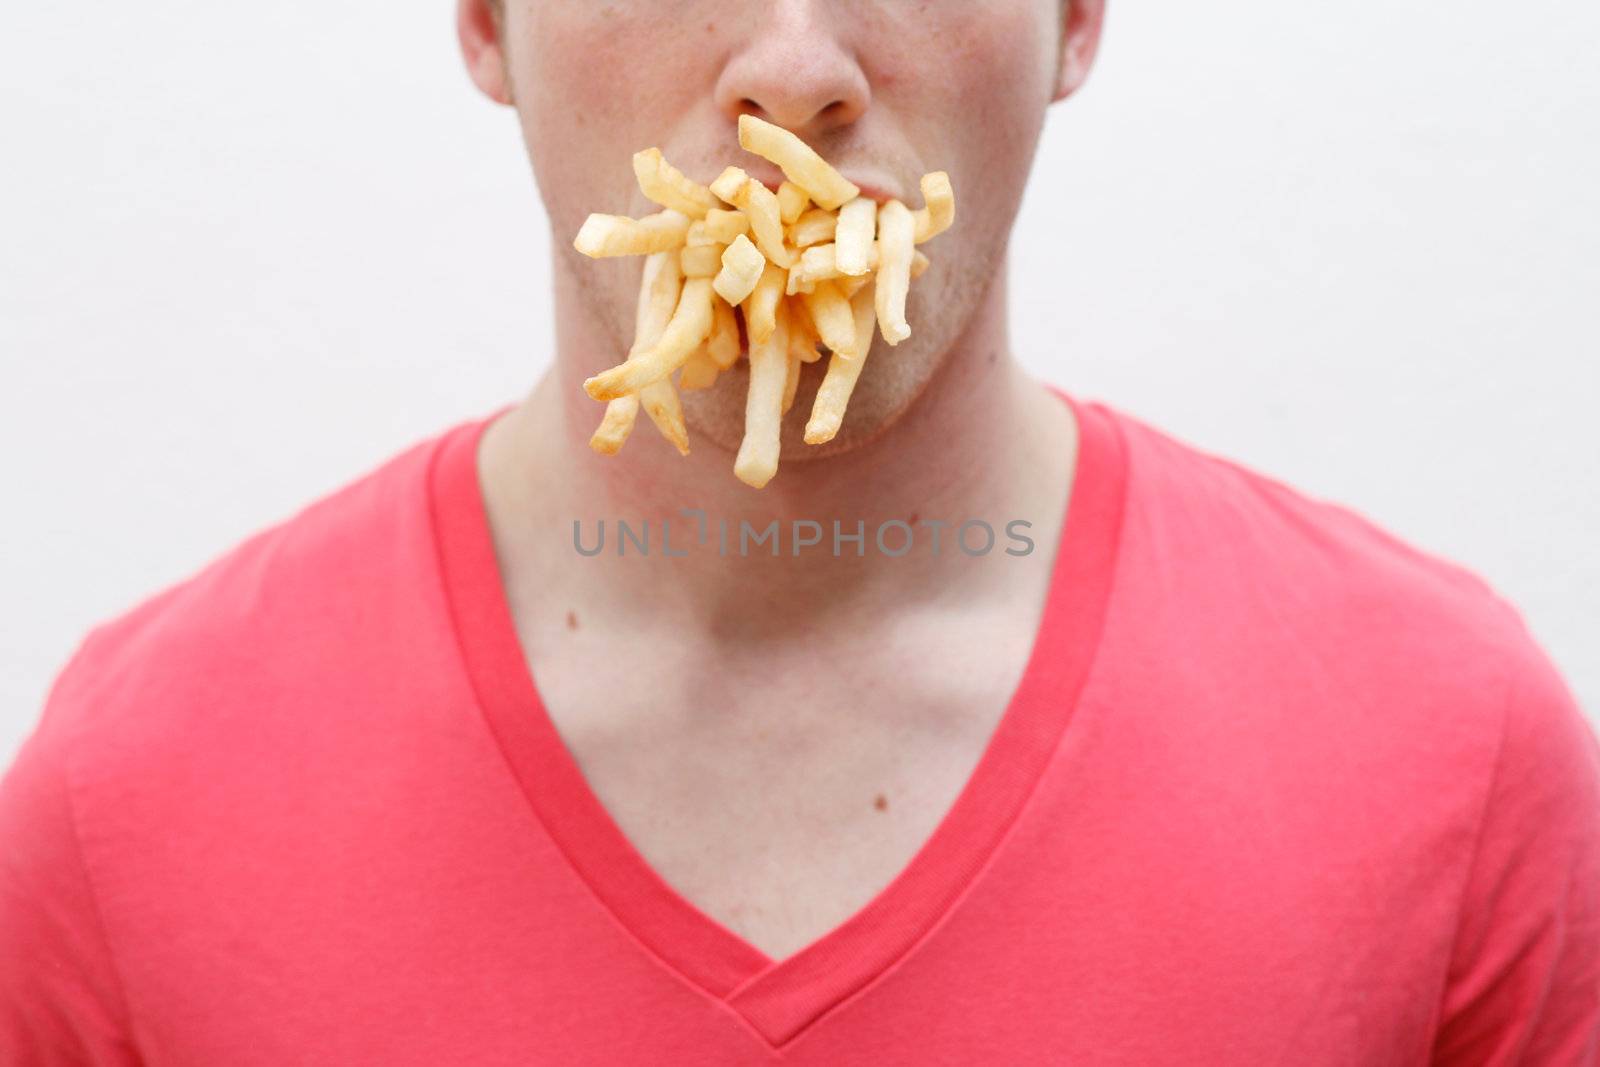 A man full of fries